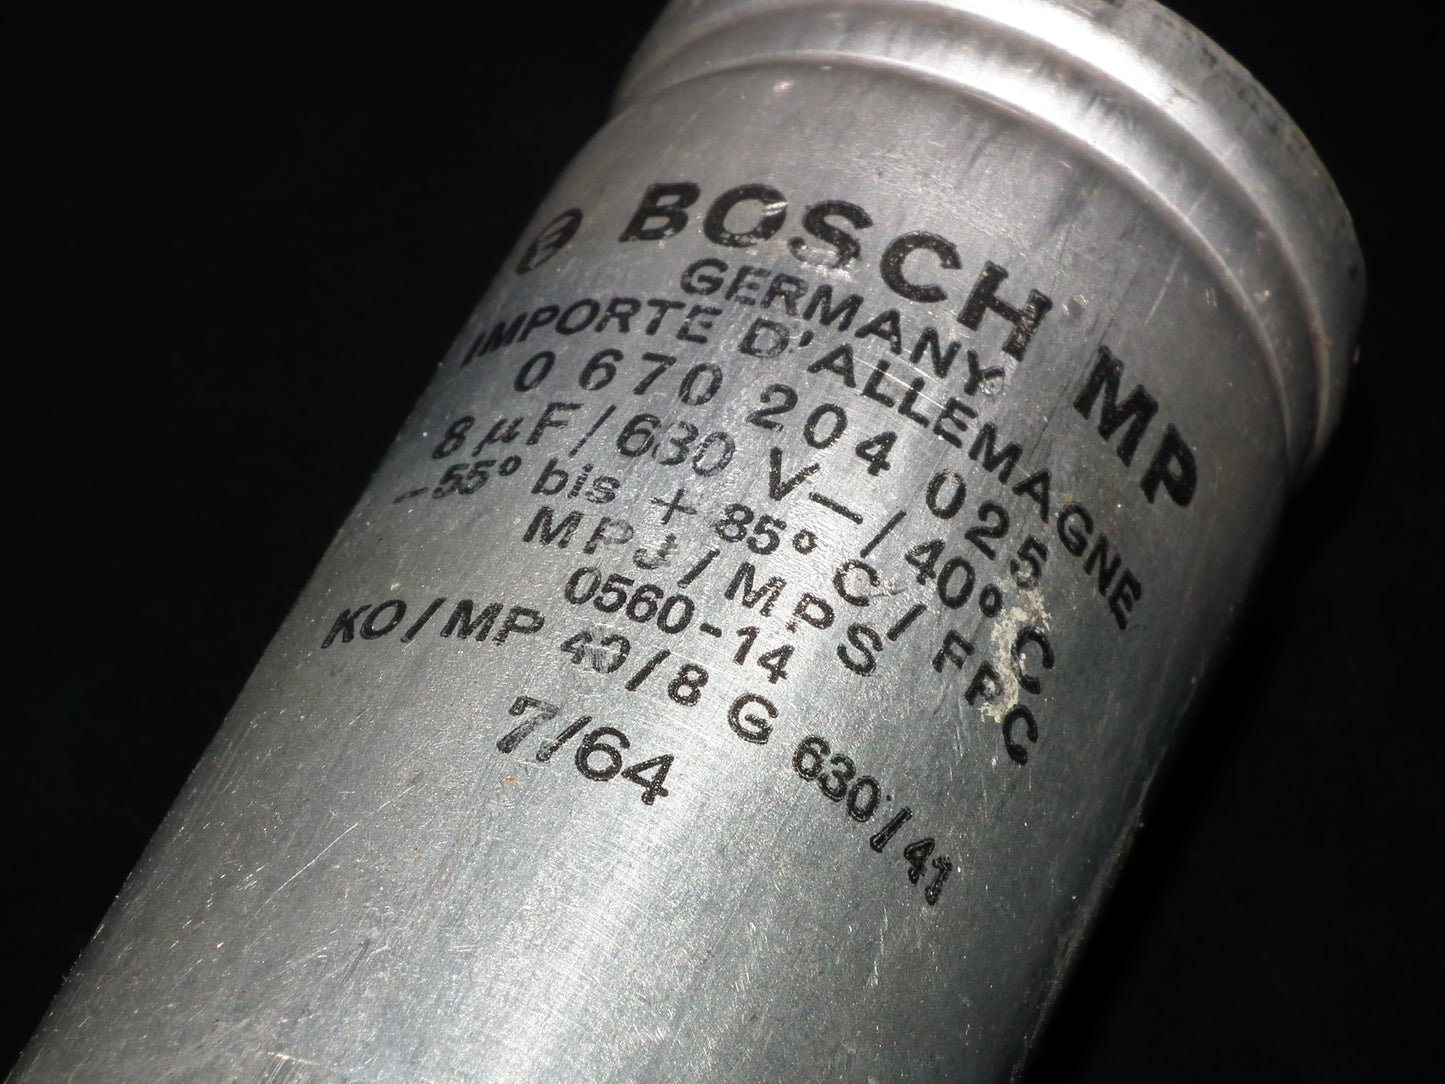 Bosch PIO capacitor 8uF 630V tube audio 8mfd (Siemens Klangfilm)